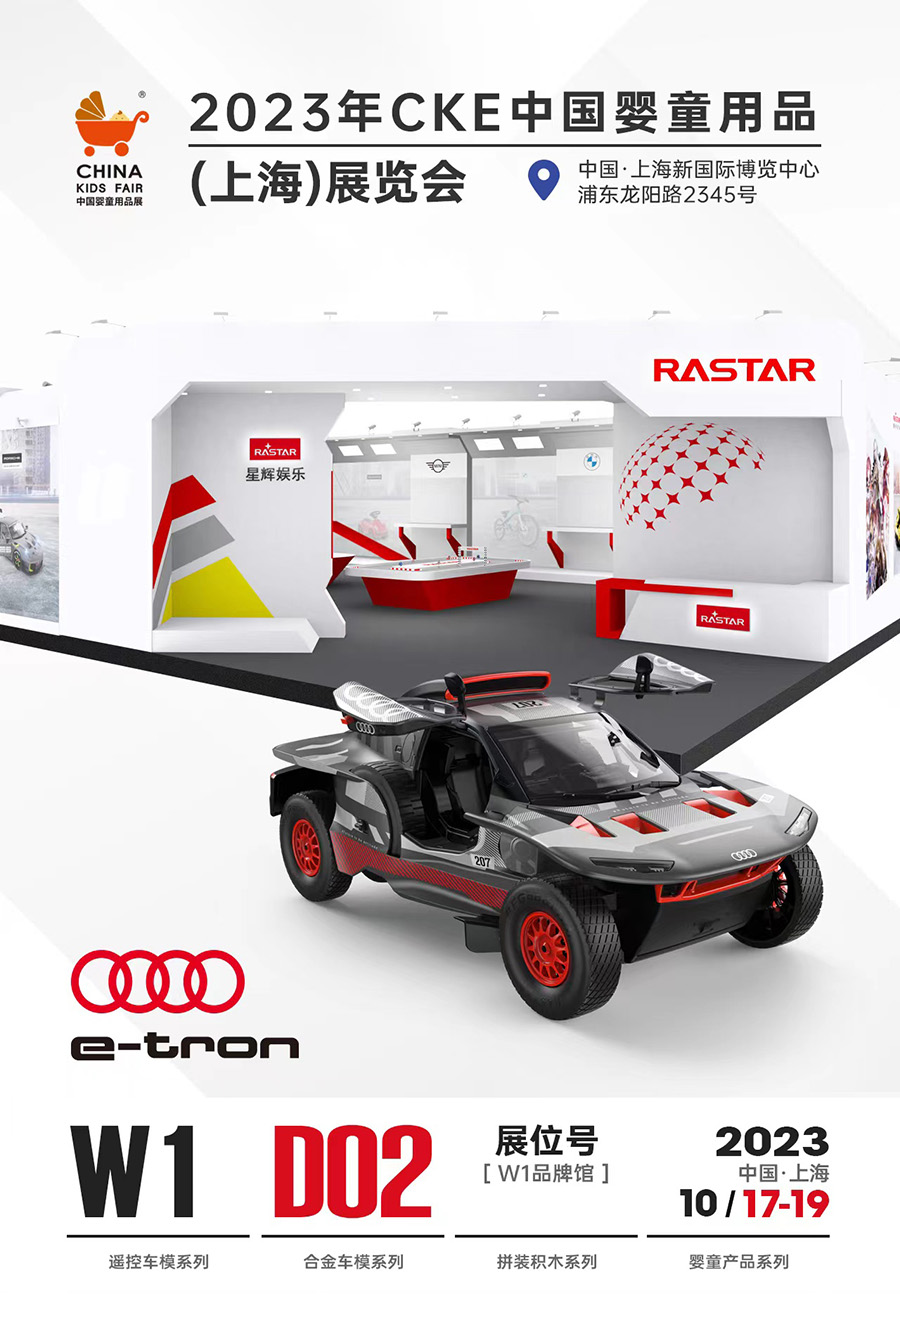 <b>Rastar Toys showed up at CKE China Kids Expo to expand the influence of “RASTAR” brand</b>